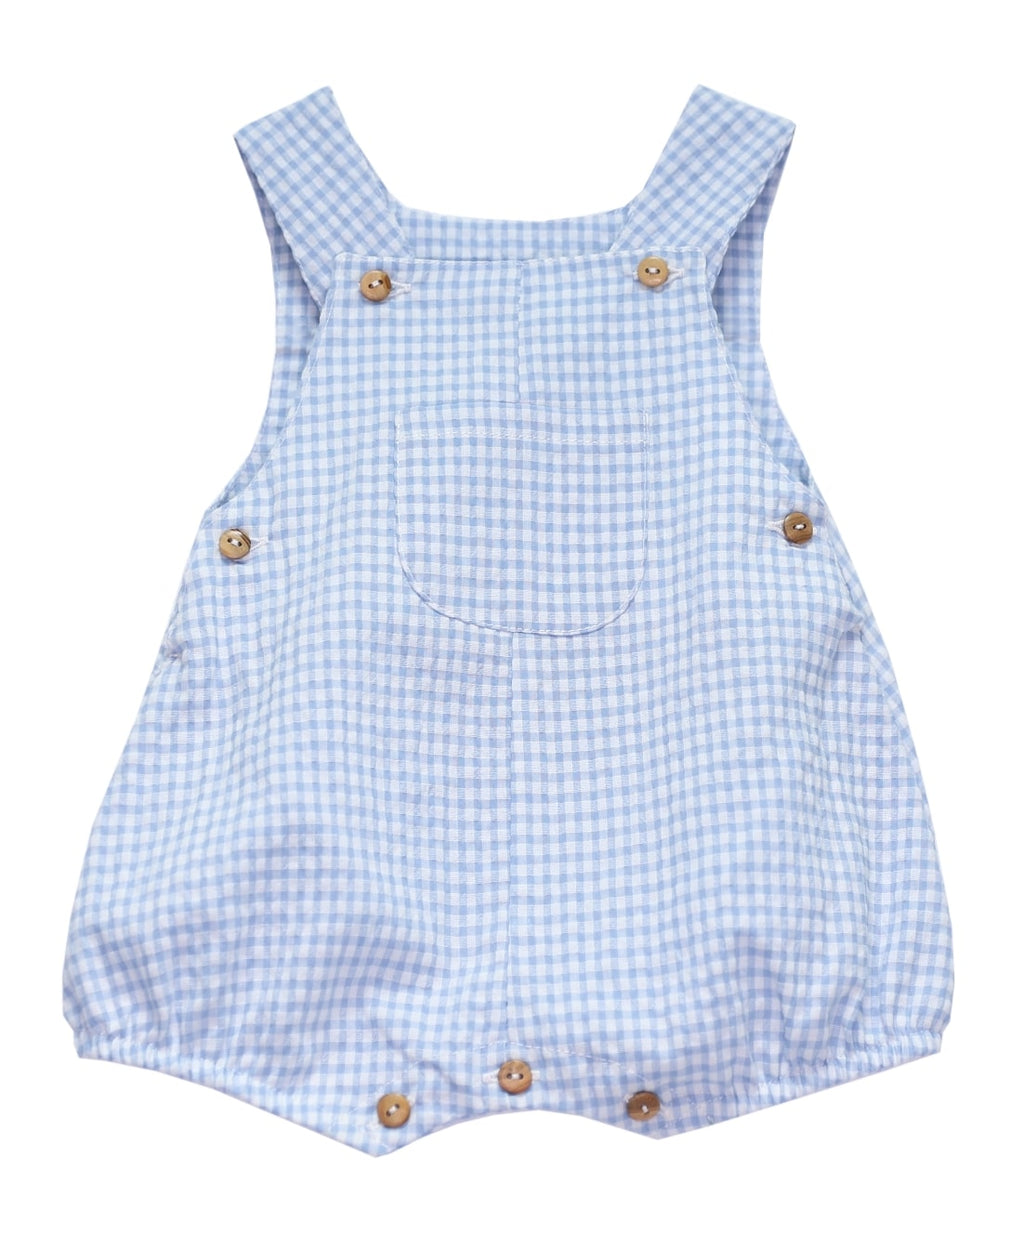 Basics - Blue Seersucker overall - Little Threads Inc. Children's Clothing